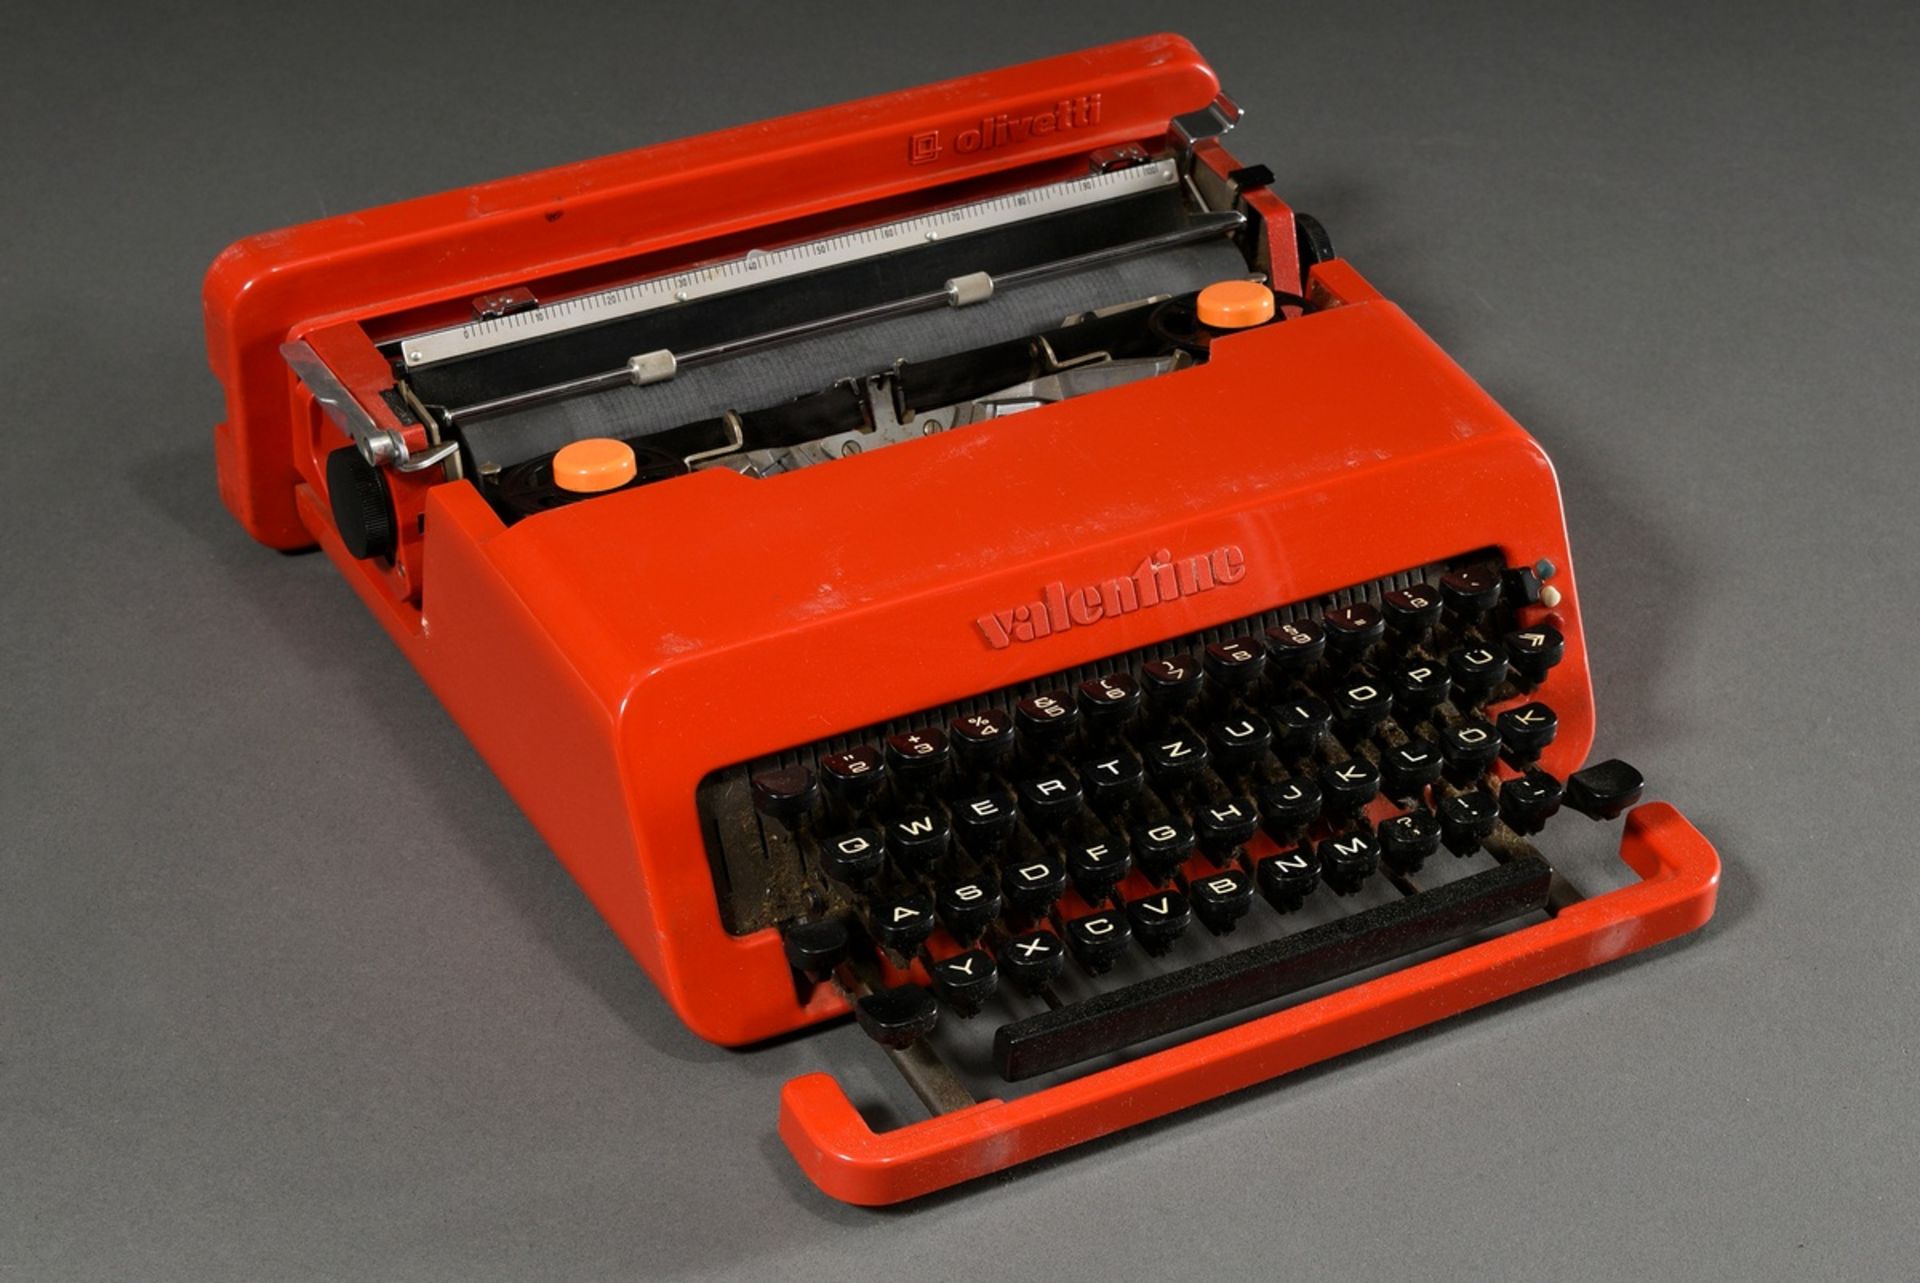 Sottsas, Ettore (1917-2007) typewriter "Valentine", design: 1968, manufactured by Olivetti/Barcelon - Image 2 of 8